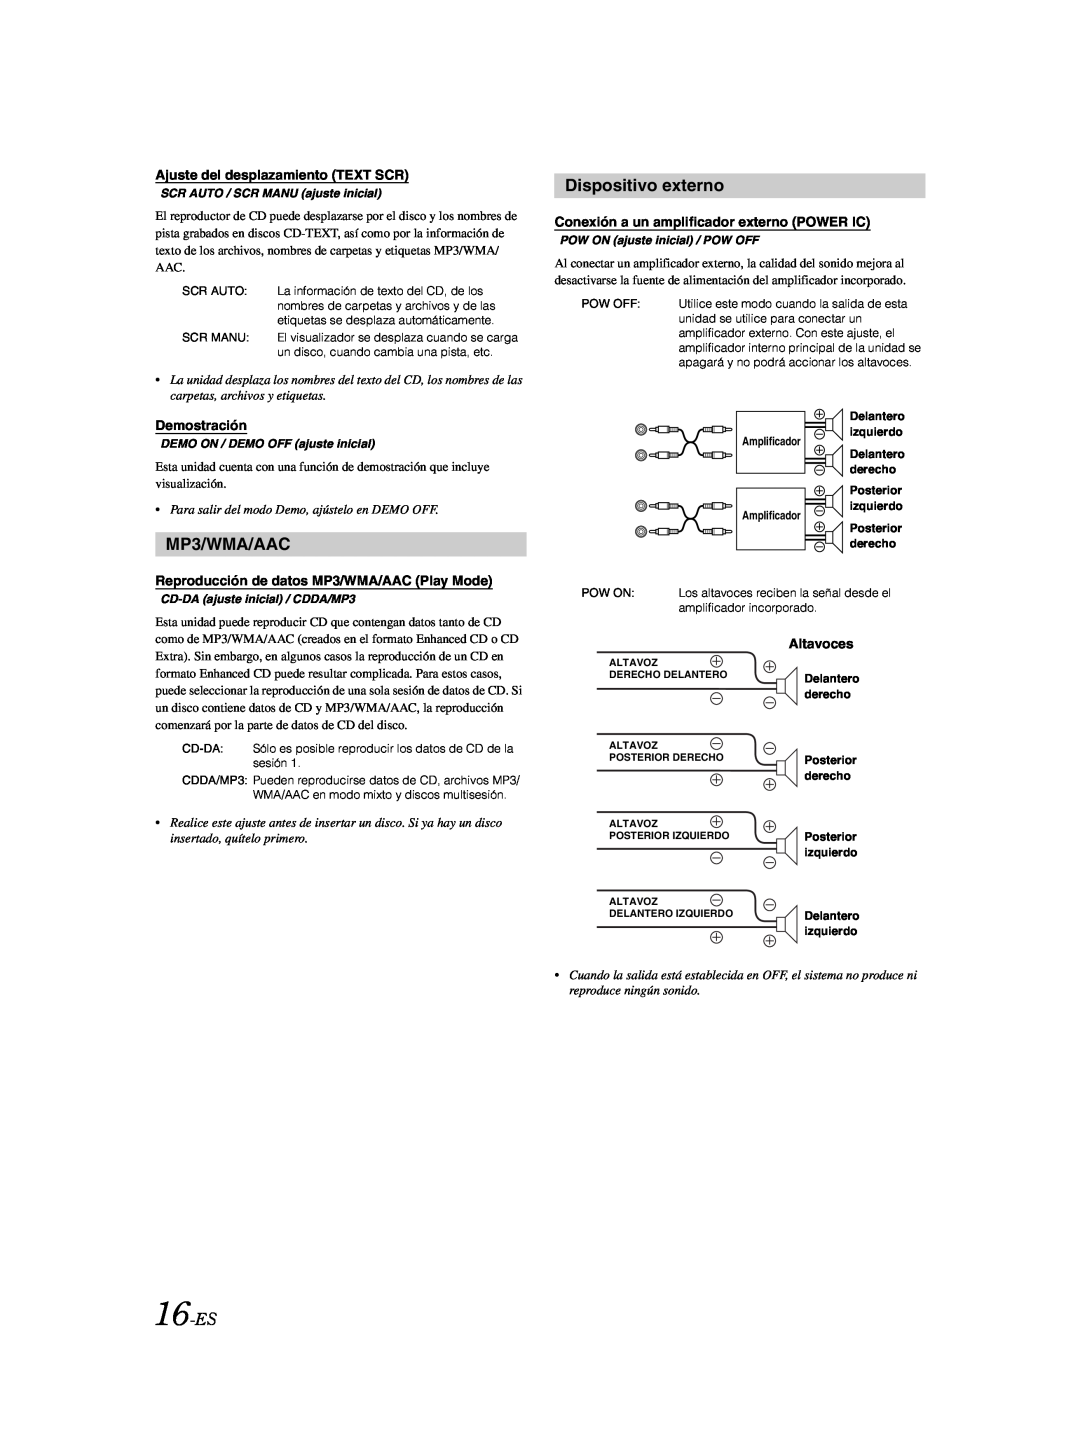 Alpine CDE-9873 owner manual Dispositivo externo, 16-ES, MP3/WMA/AAC 